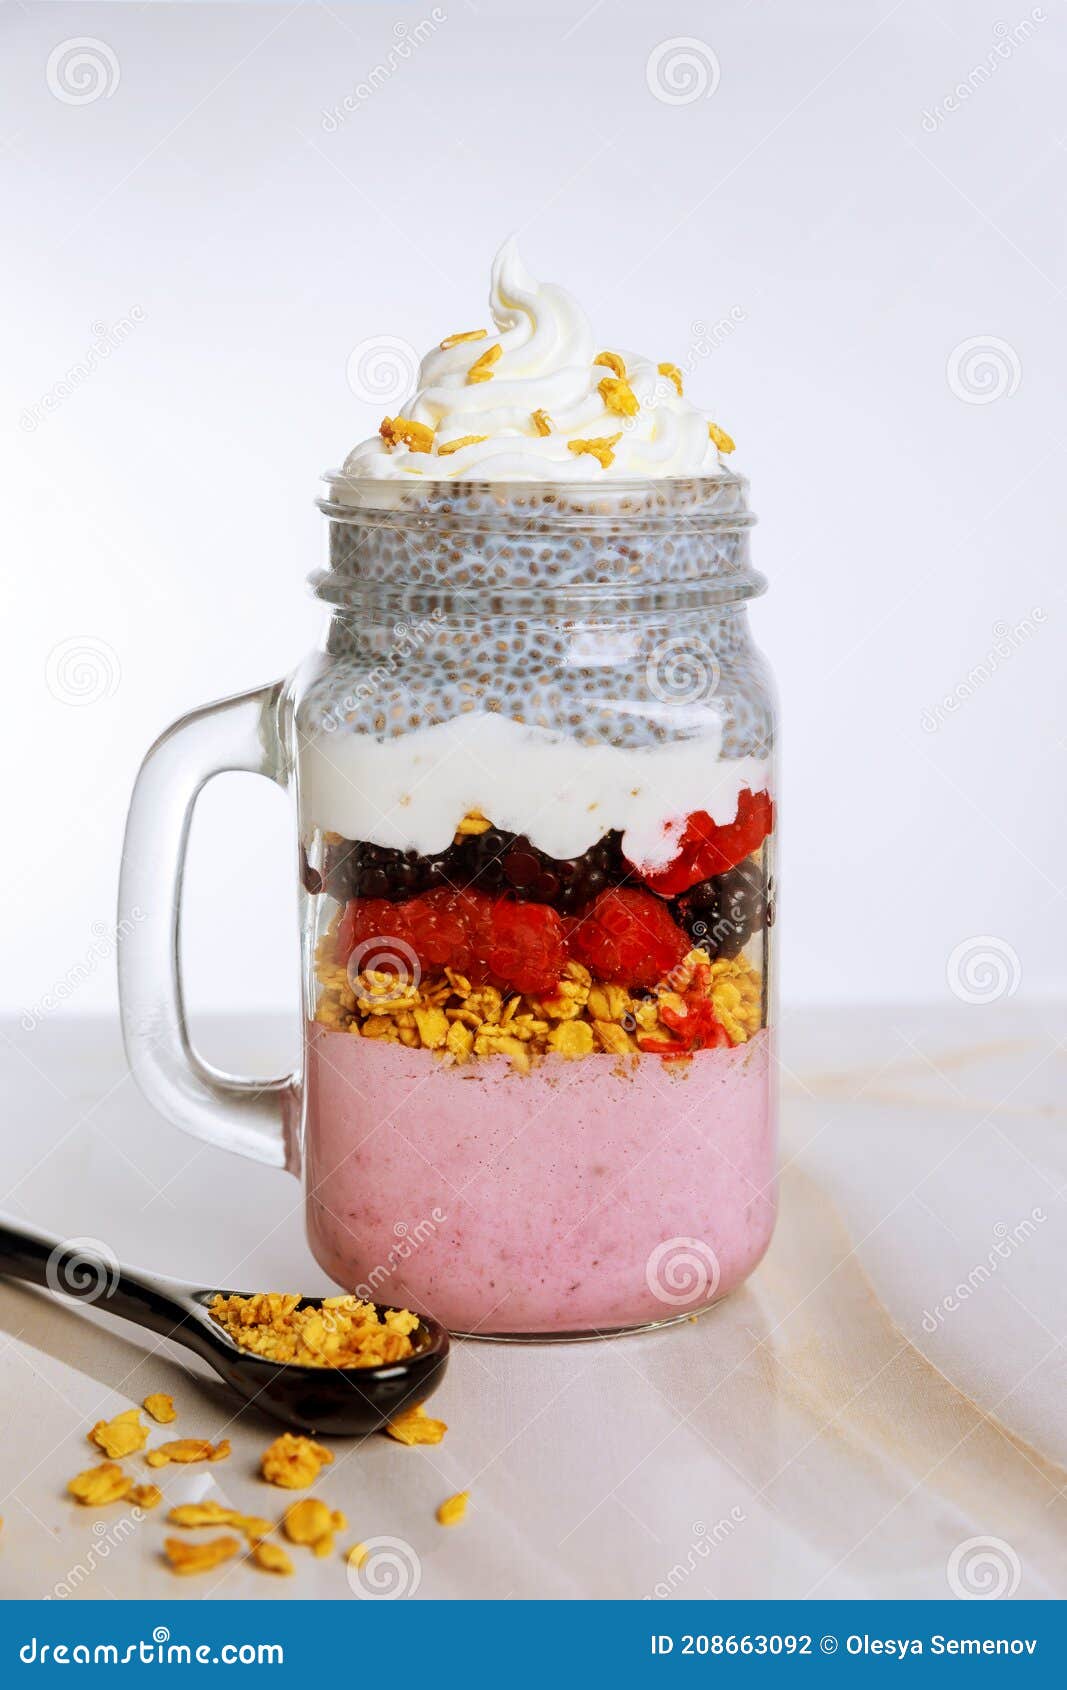 Chia Pudding with Fresh Berries, Yogurt and Granola Stock Photo Image of fruit, gourmet: 208663092